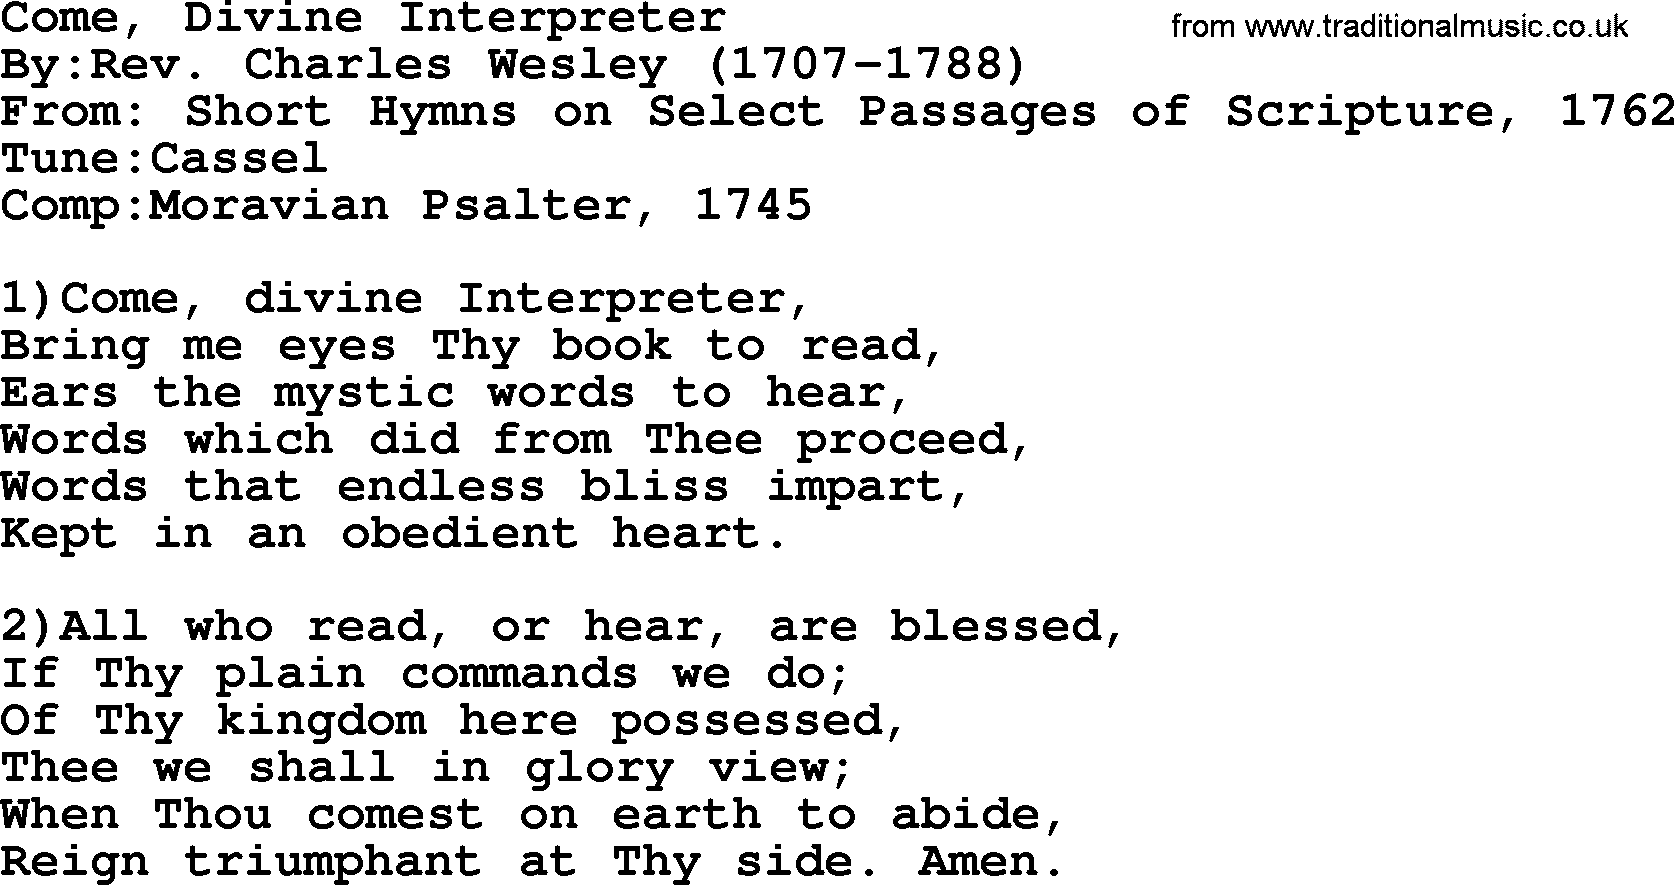 Methodist Hymn: Come, Divine Interpreter, lyrics